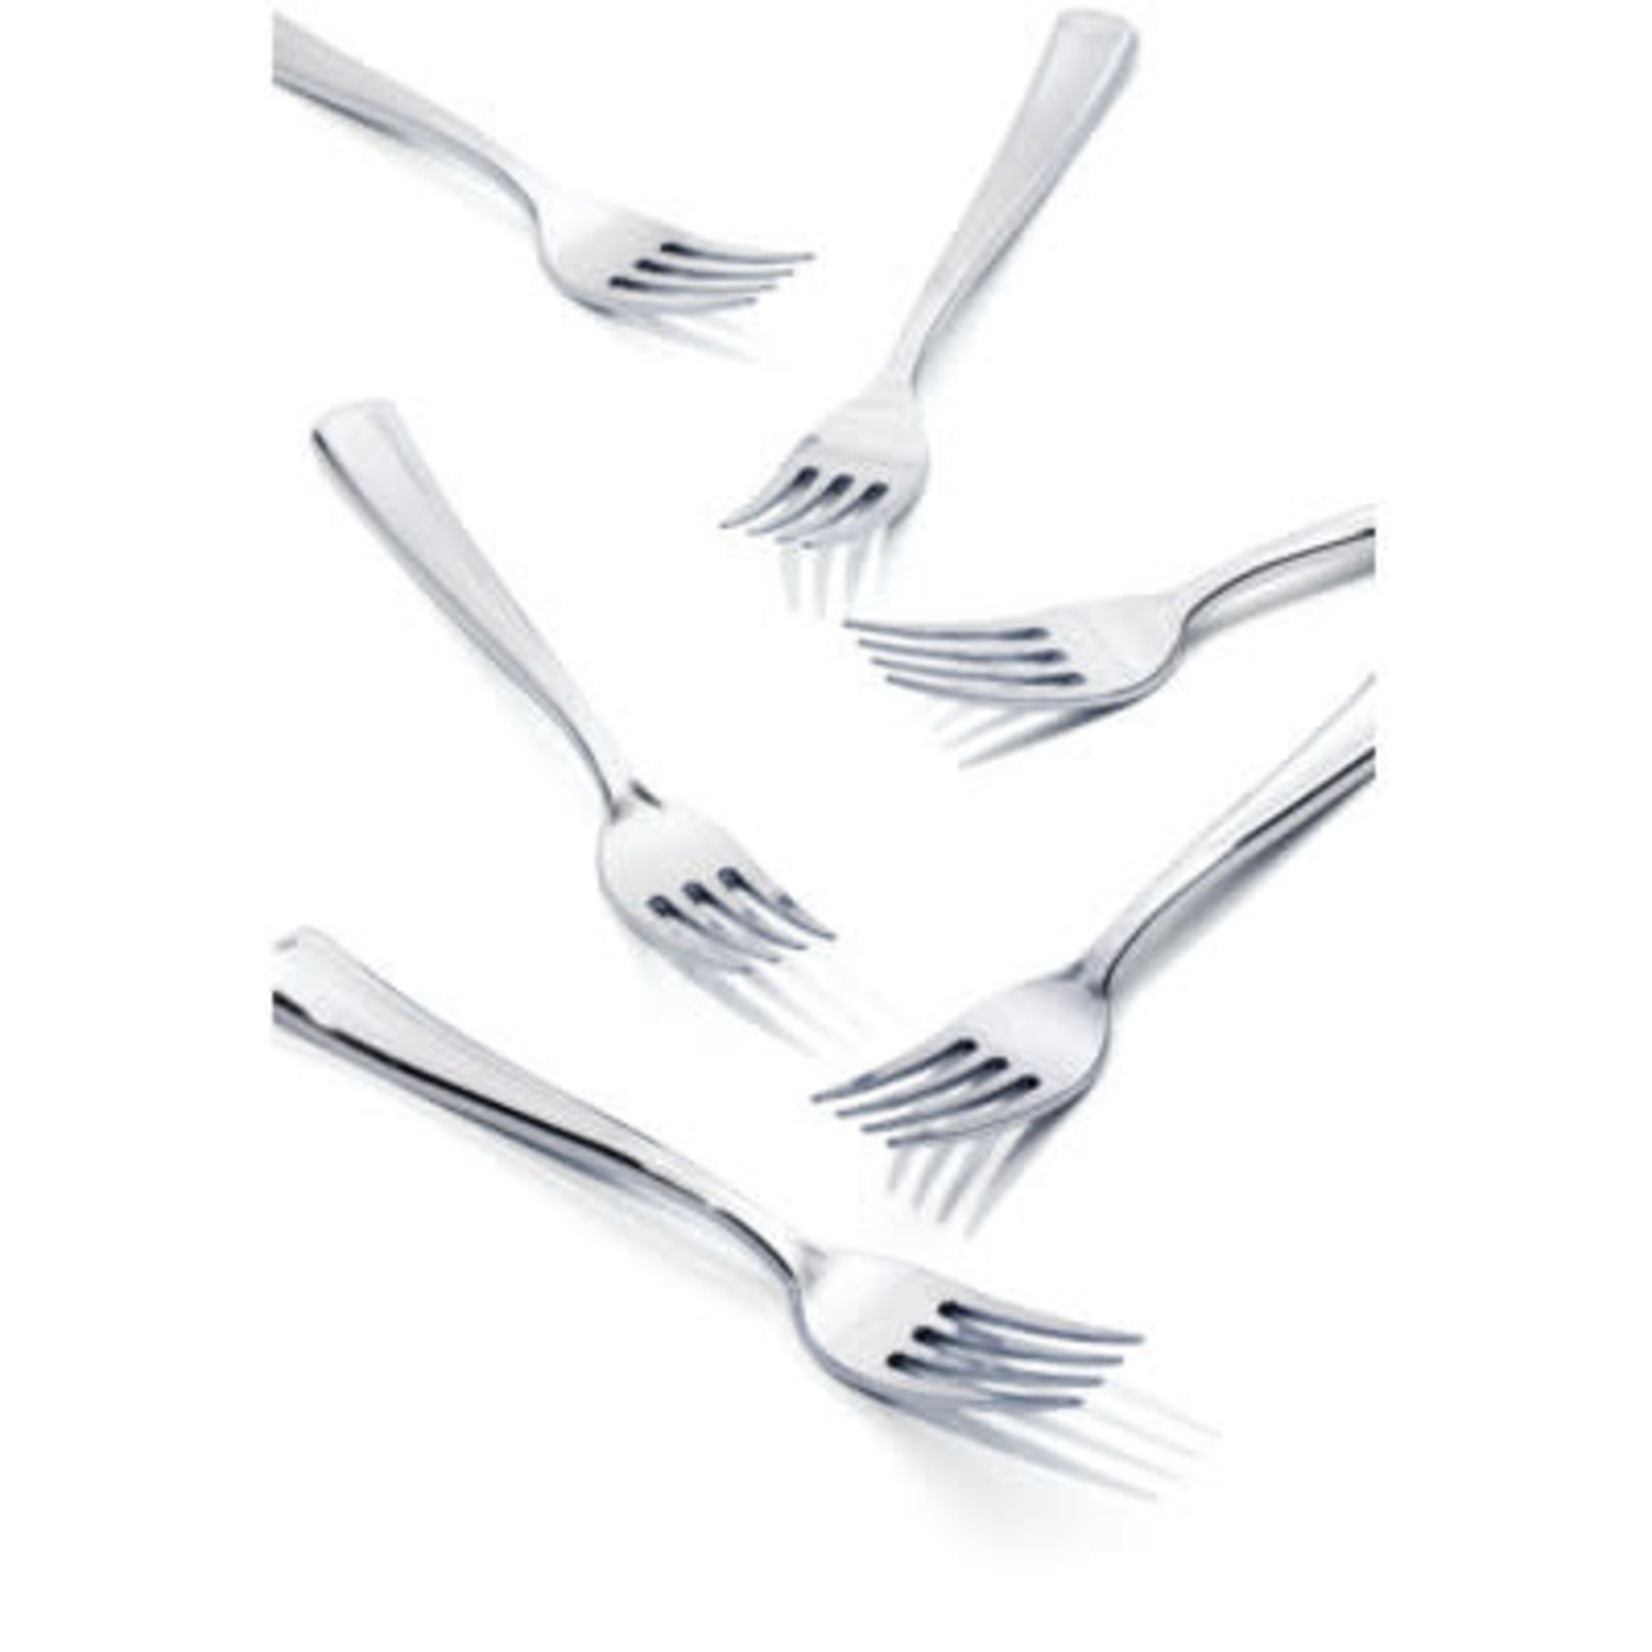 SENS Silver Metallic Forks - 24ct.